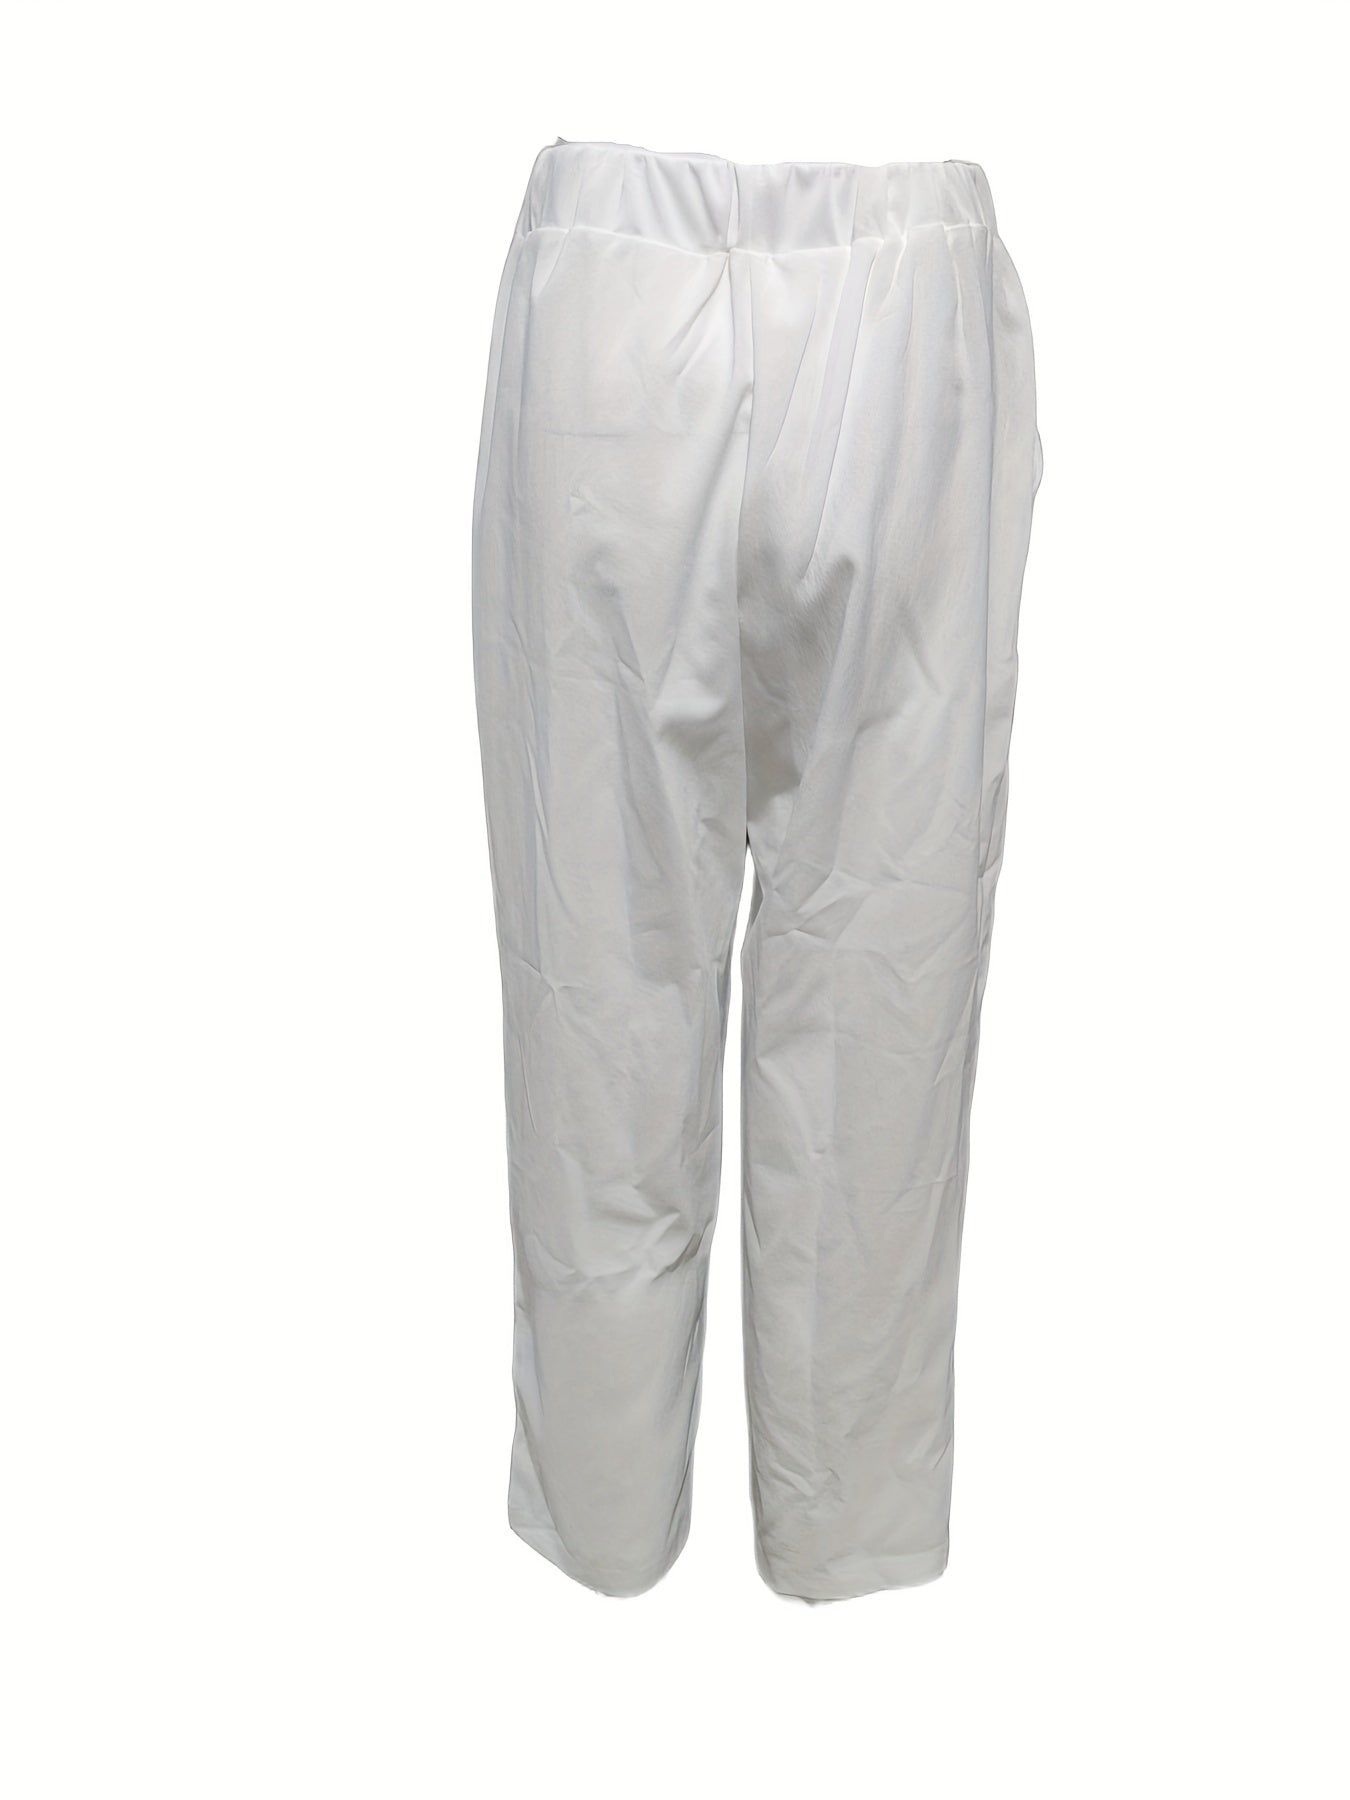 「lovevop」Boho Dragonfly Print Pants, Vintage High Waist Long Length Summer Pants, Women's Clothing